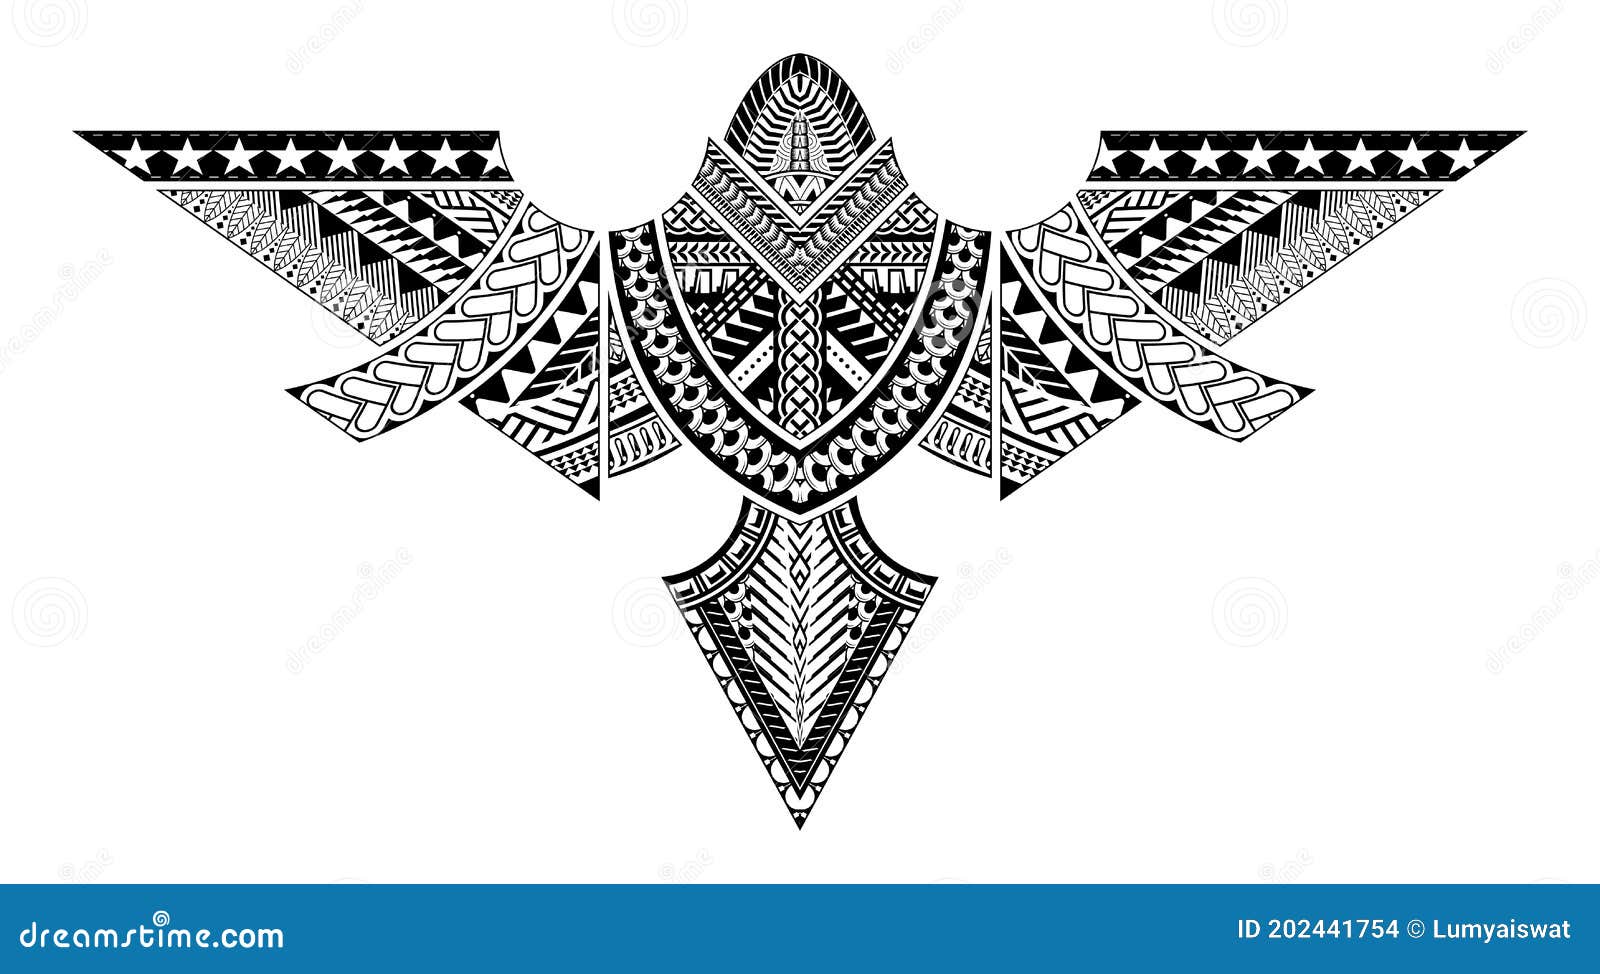 Abstract Polynesian Ornamental Tattoo Design Stock Vector - Illustration of graphic, ethnic: 202441754